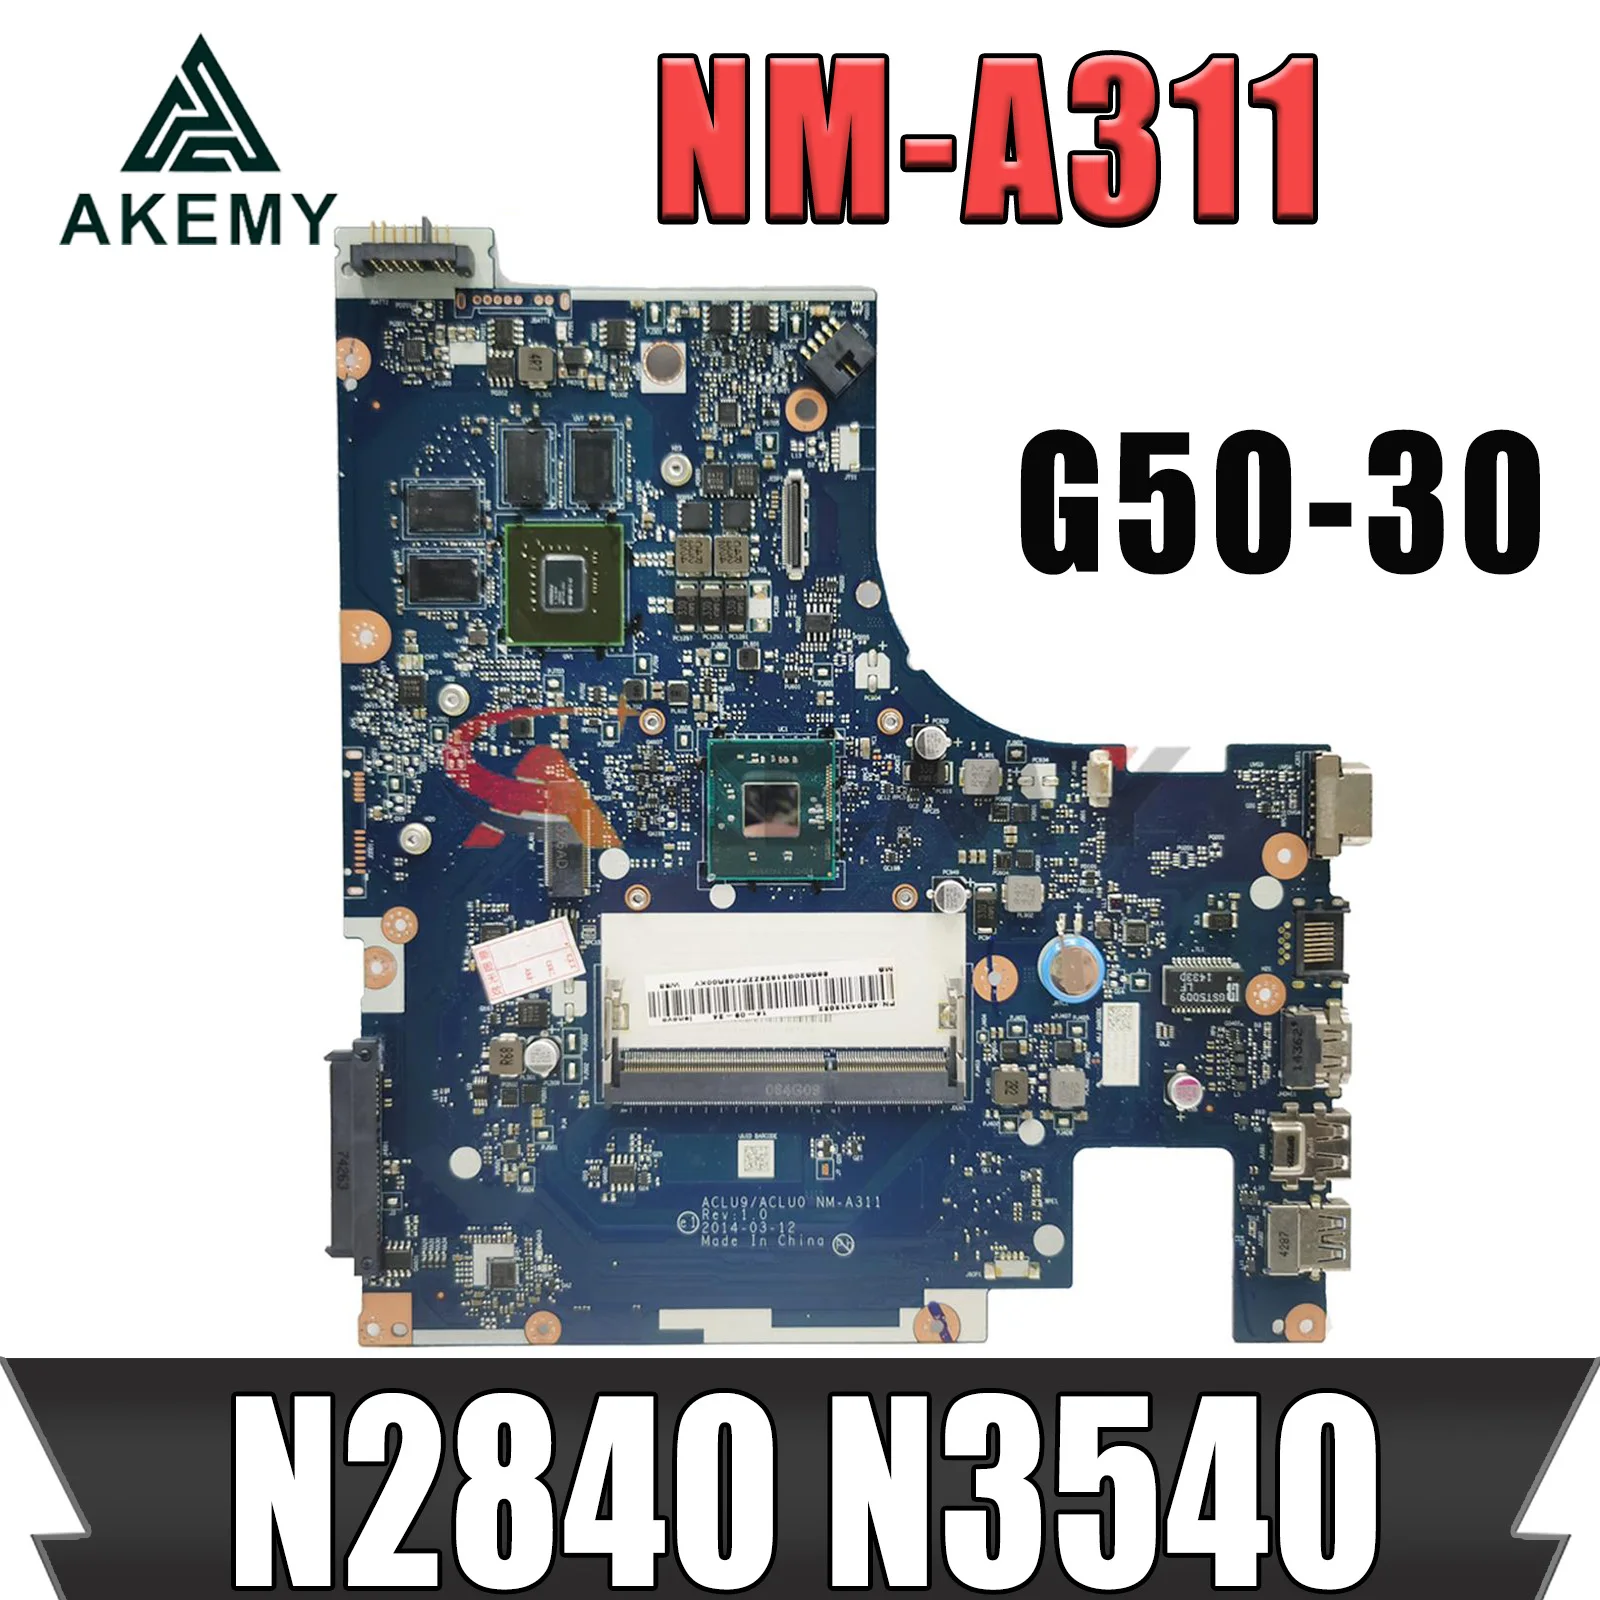 

ACLU9 ACLU0 NM-A311 For Lenovo Ideapad G50-30 Laptop Motherboard With N2830 N2840 N3530 N3540 CPU GT820M 2GB GPU